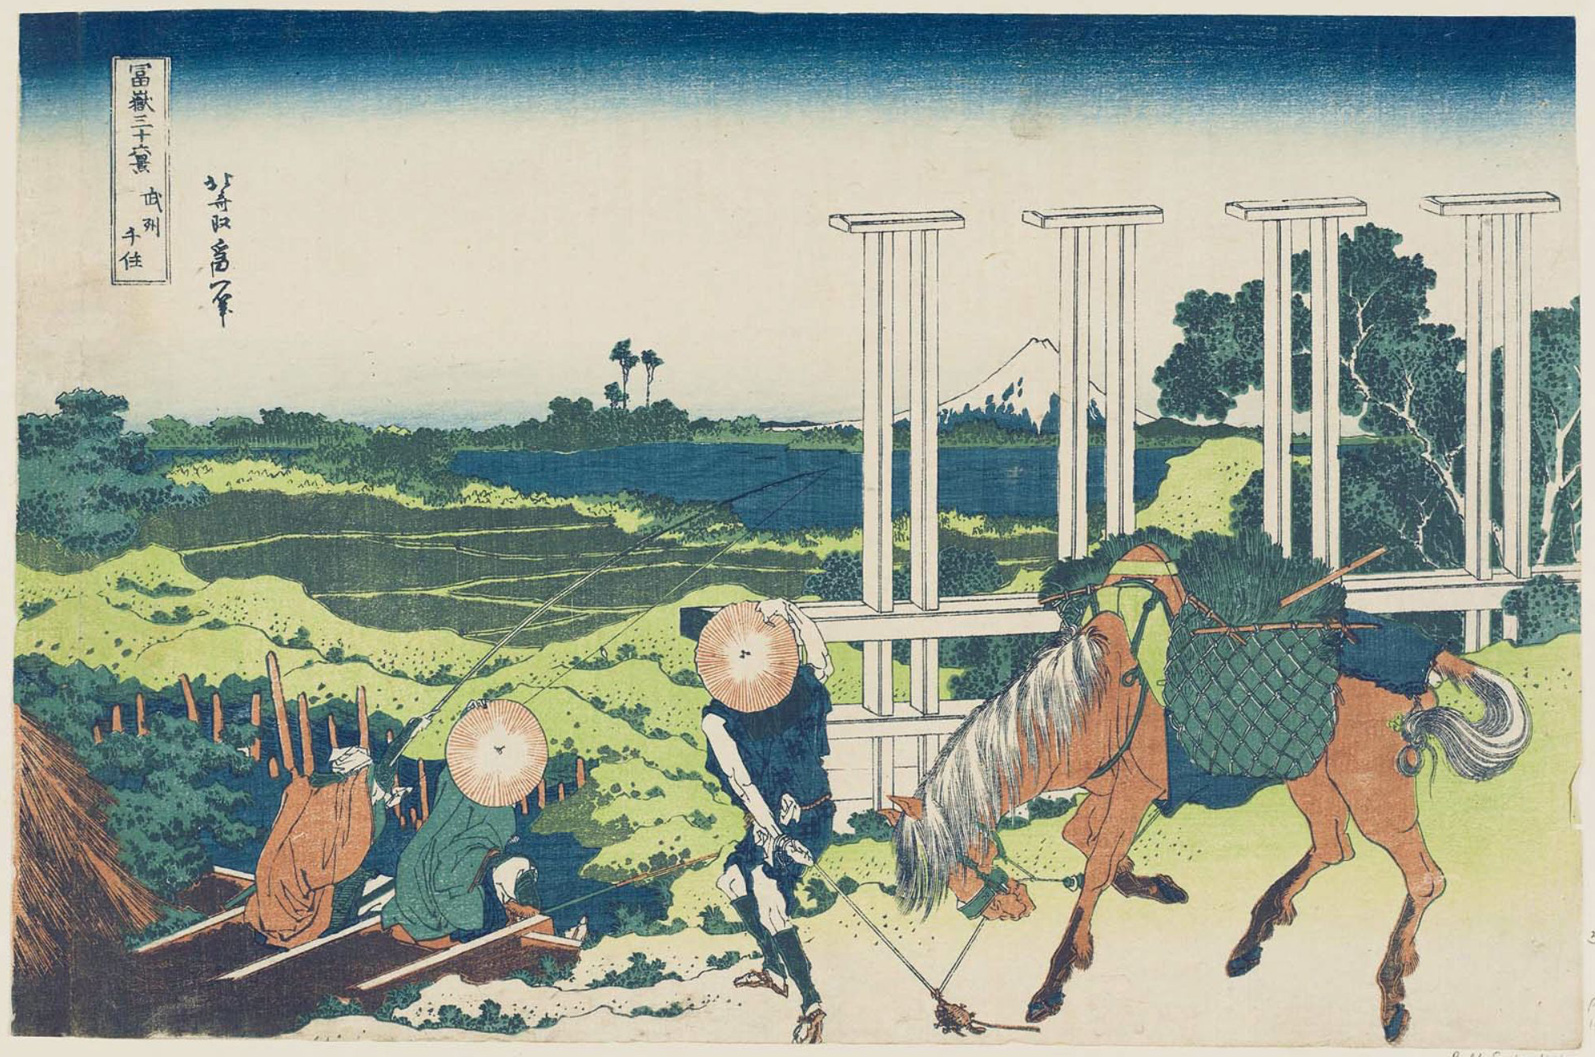 Hokusai - #7 Senju in Musashi Province - 36 Views of Mt Fuji